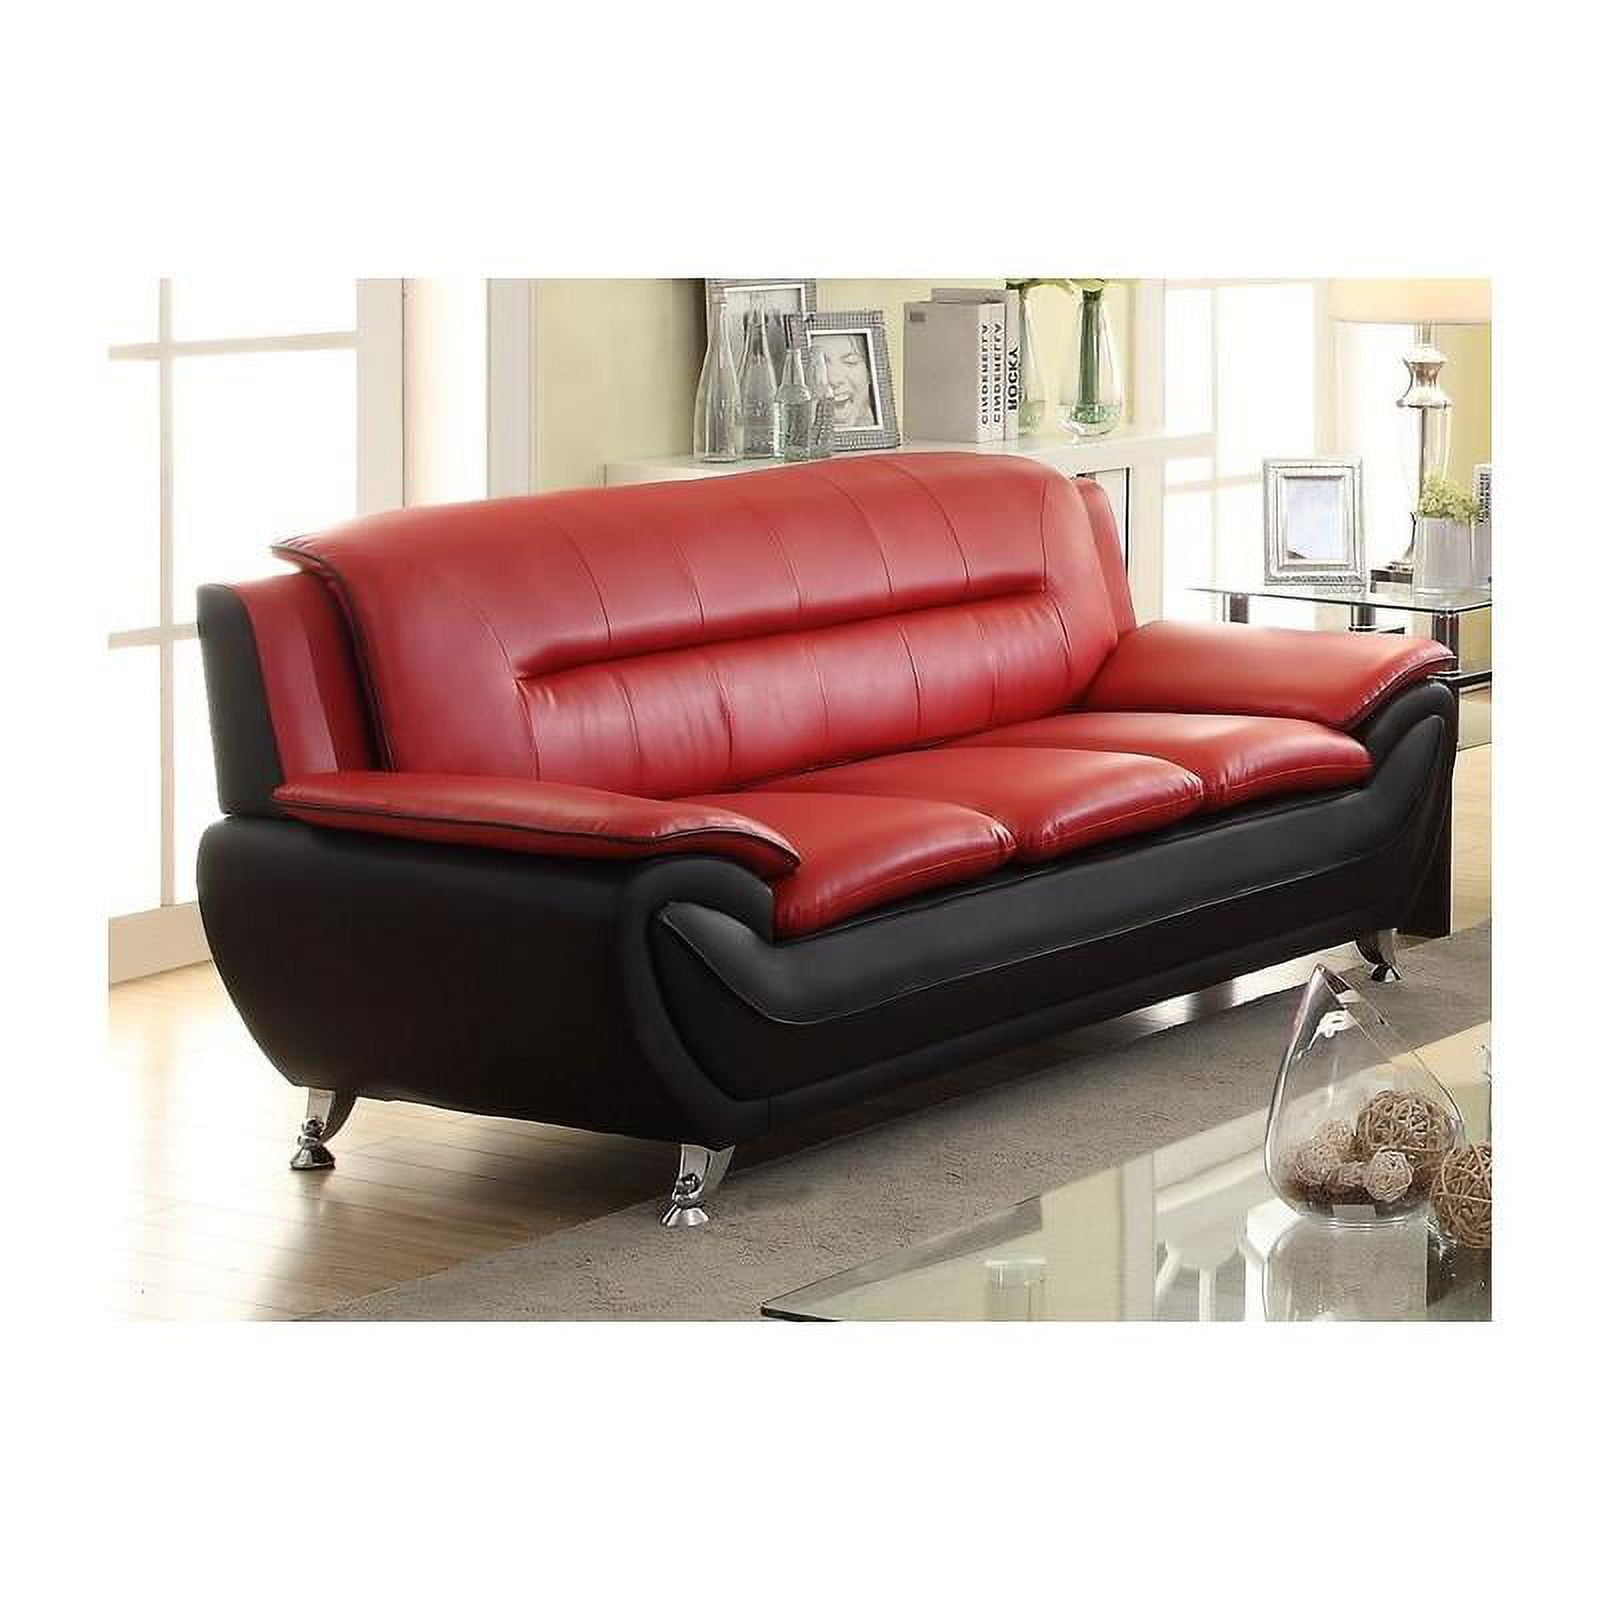 Kingway Furniture Oreo Faux Leather